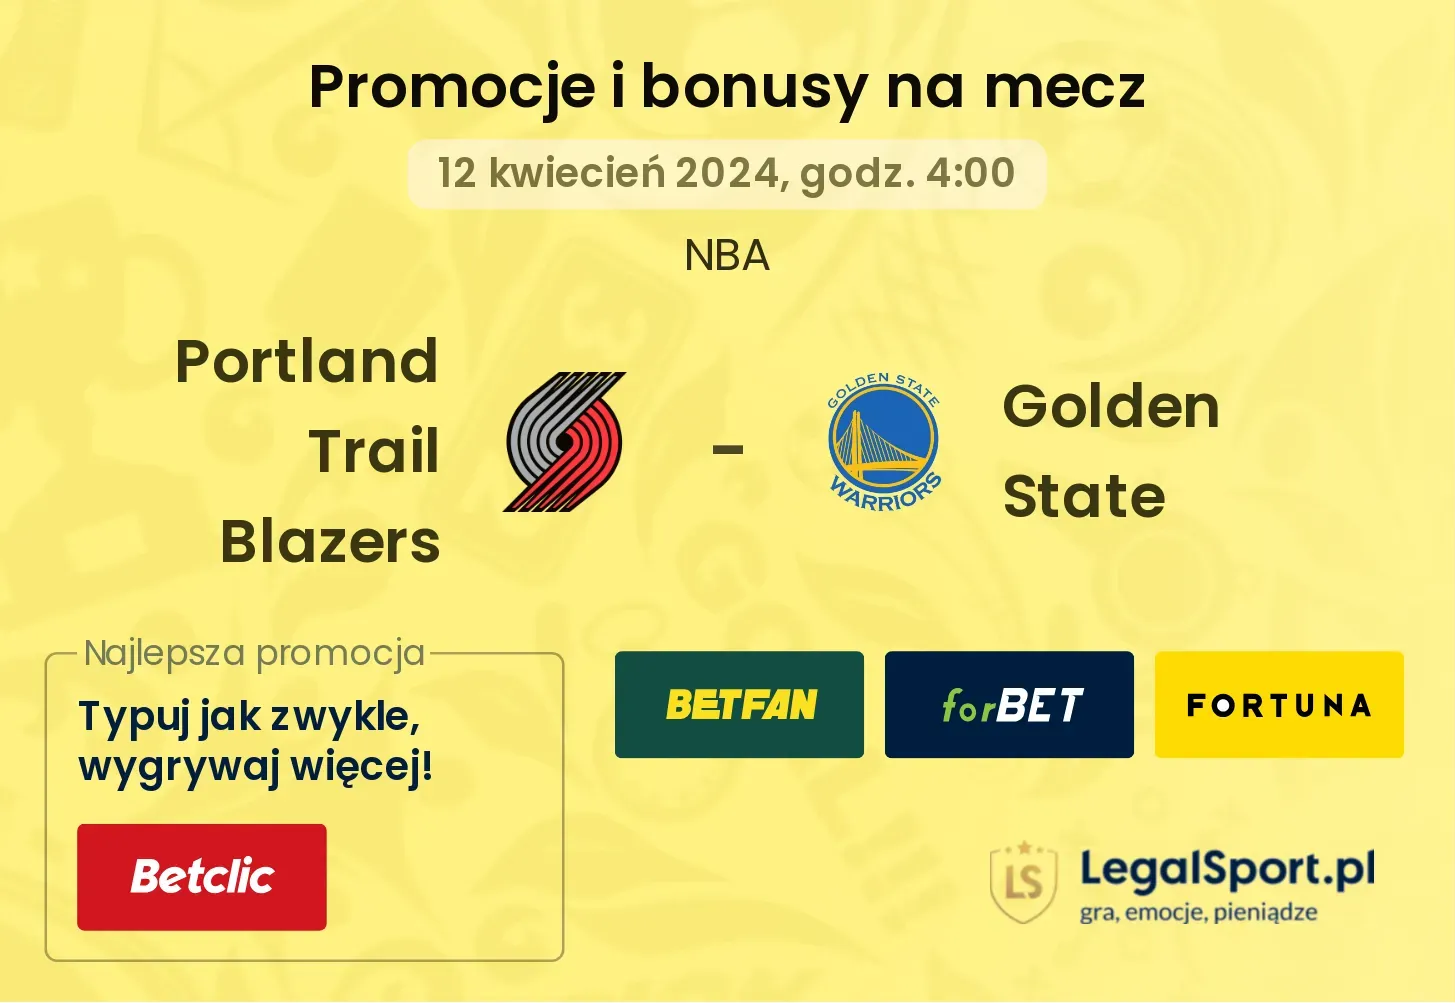 Portland Trail Blazers - Golden State promocje bonusy na mecz